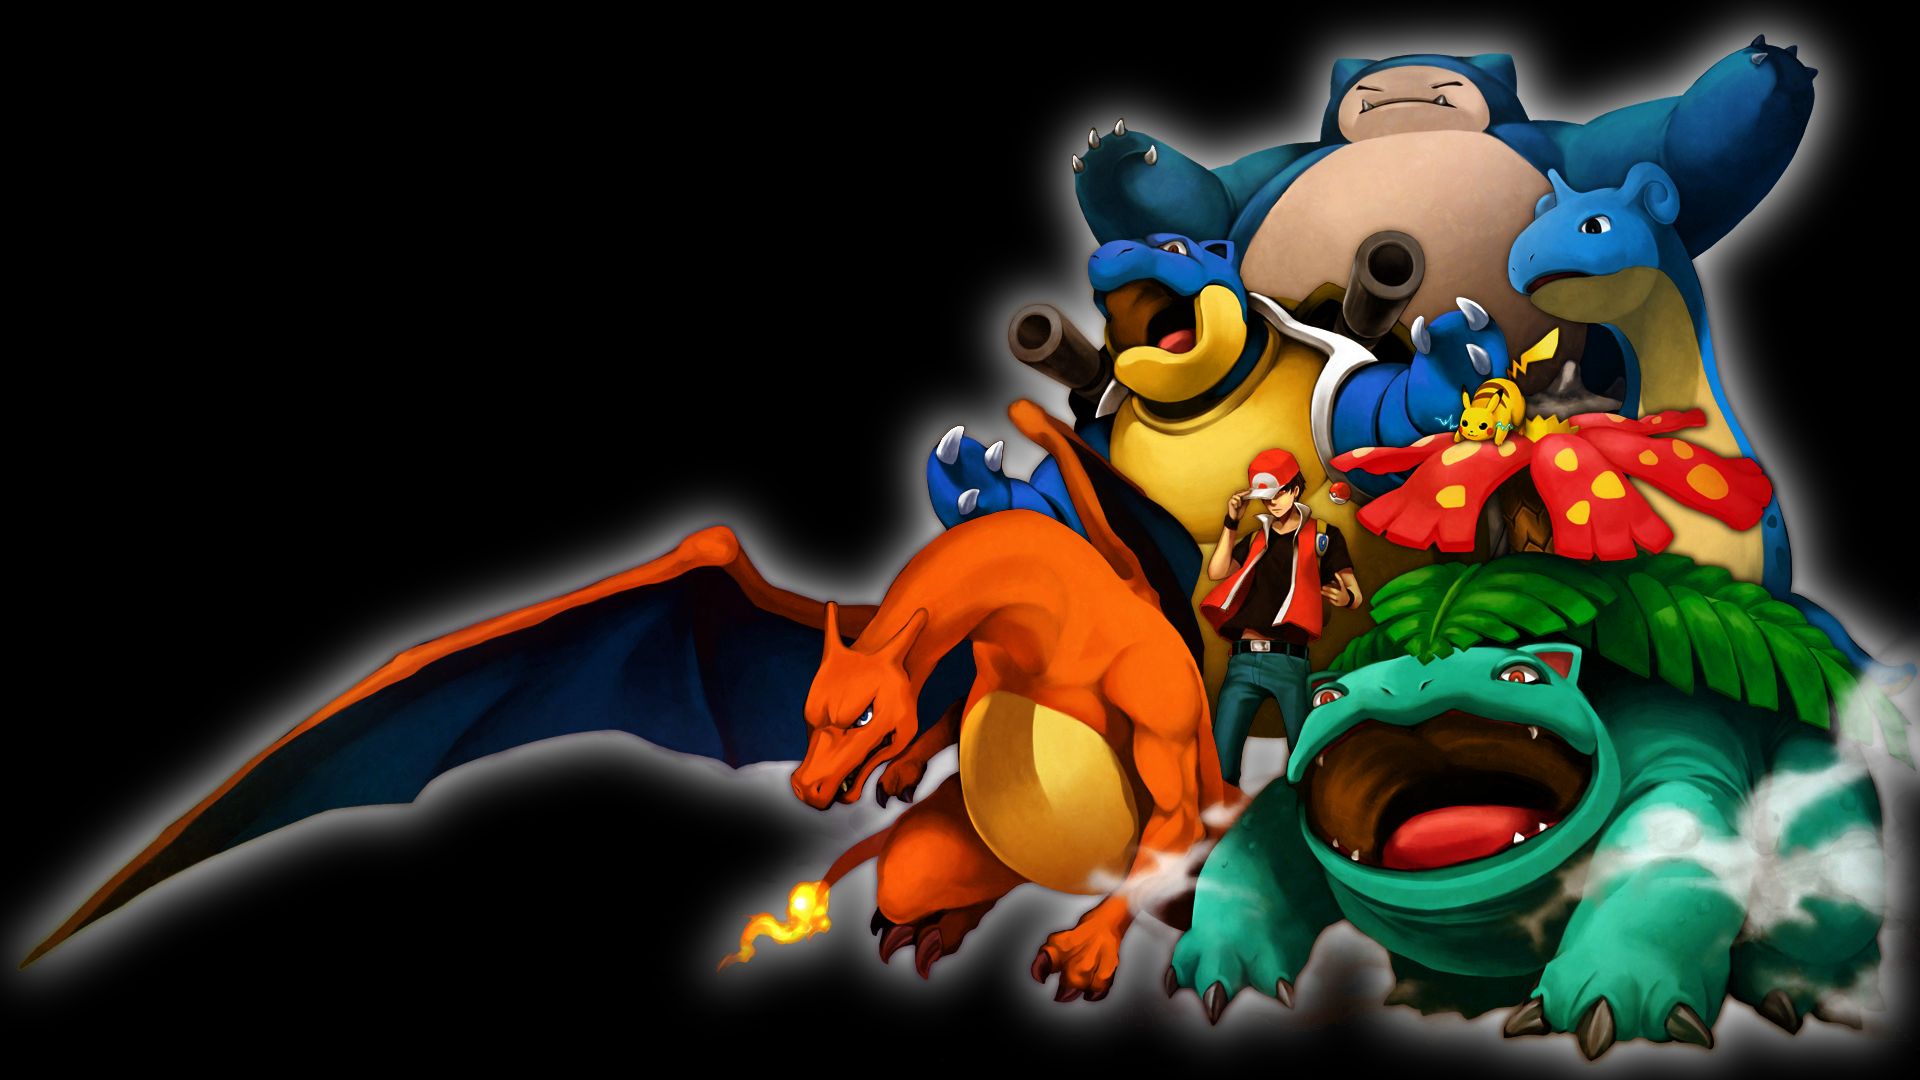 pokémon, venusaur (pokémon), pikachu, video game, pokemon: red and blue, blastoise (pokémon), charizard (pokémon), lapras (pokémon), red (pokémon), snorlax (pokémon)